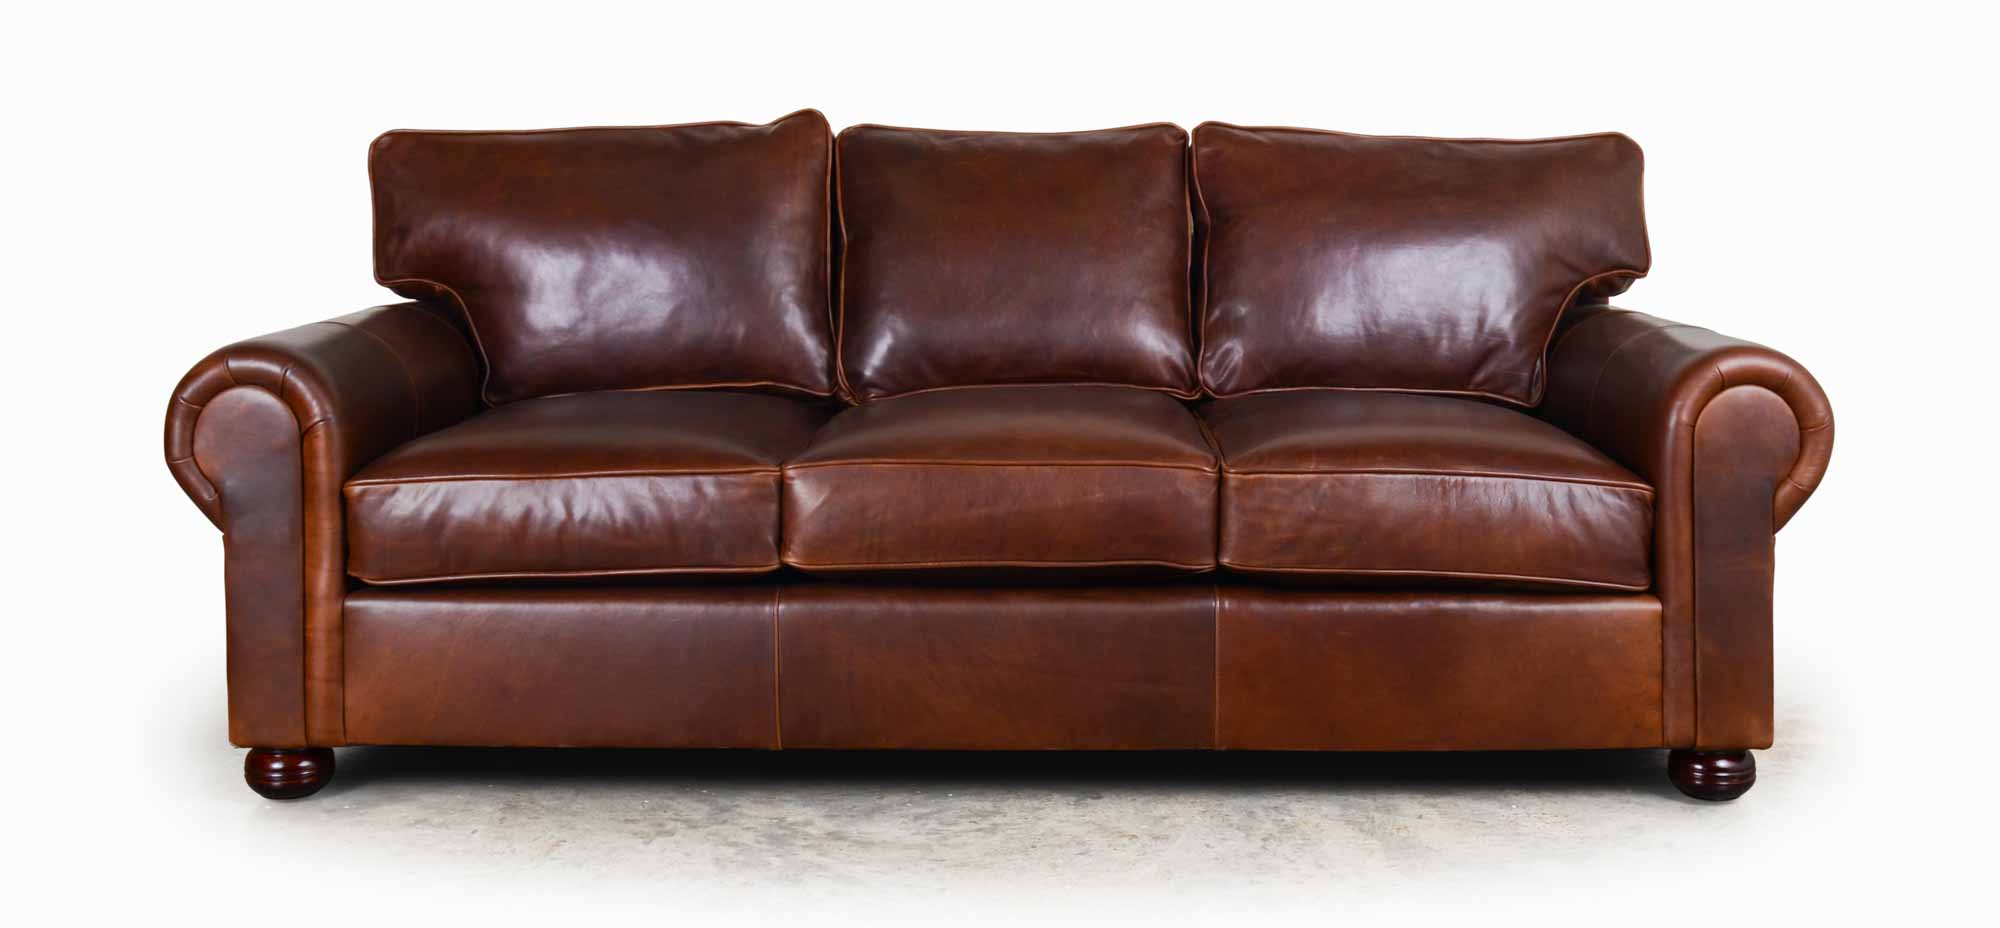 Lexington Vs Rh Lancaster Sofa, Leather Furniture Repair Charlotte Nc